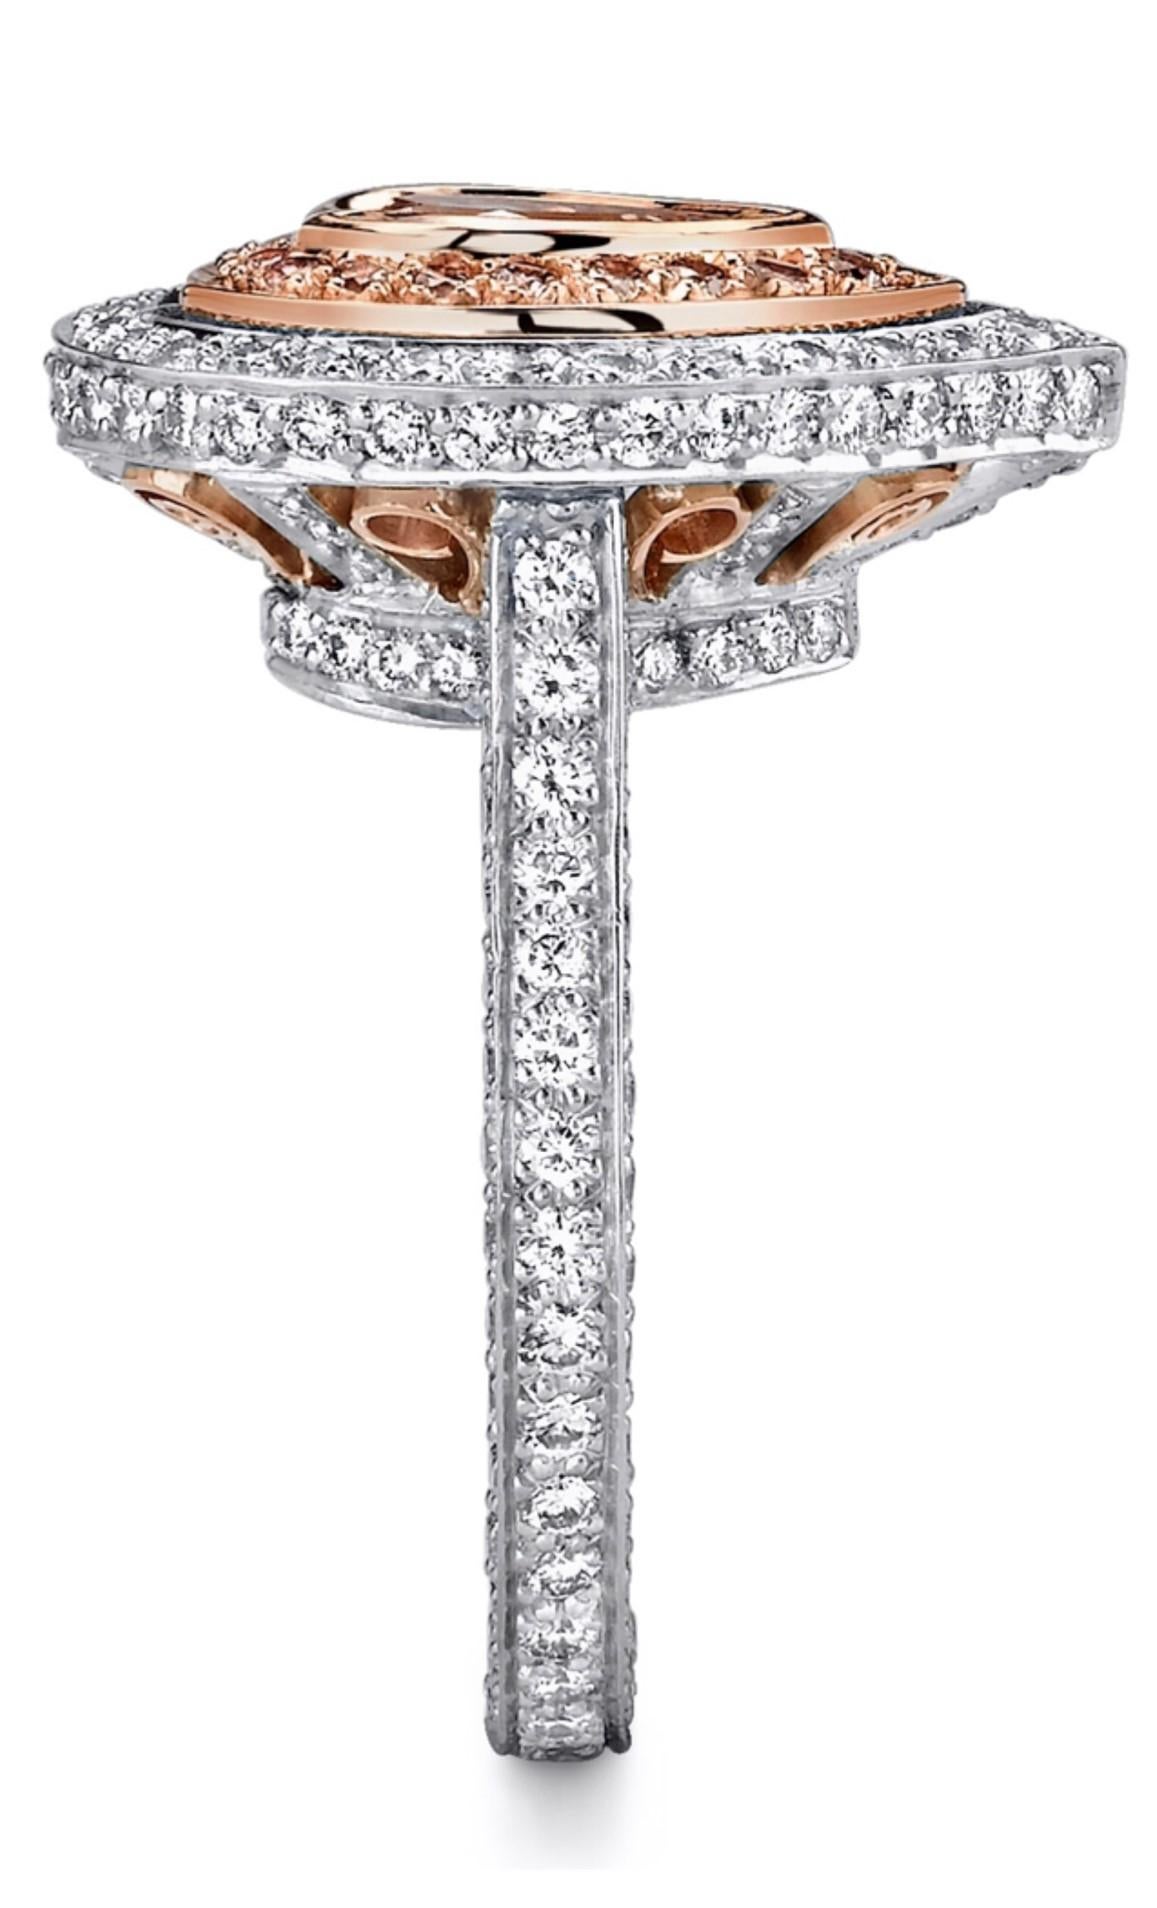 .75 carat pear shaped diamond ring